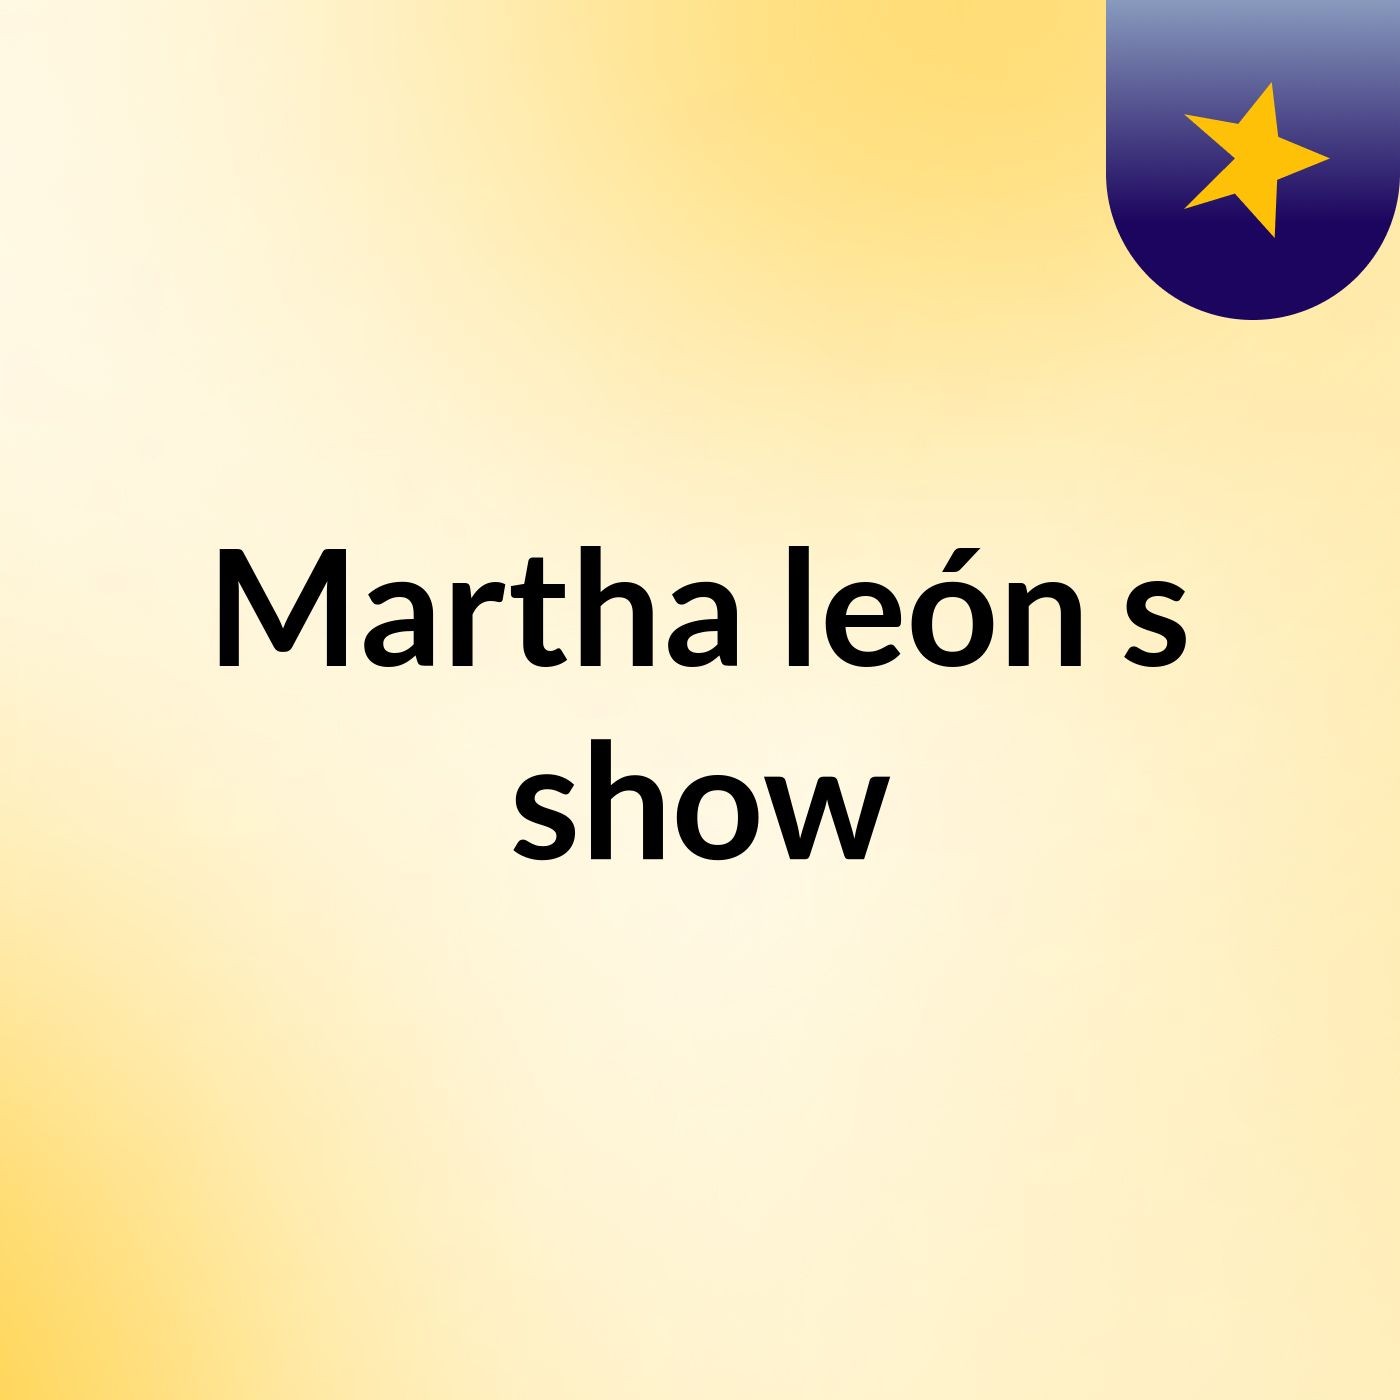 Martha león's show